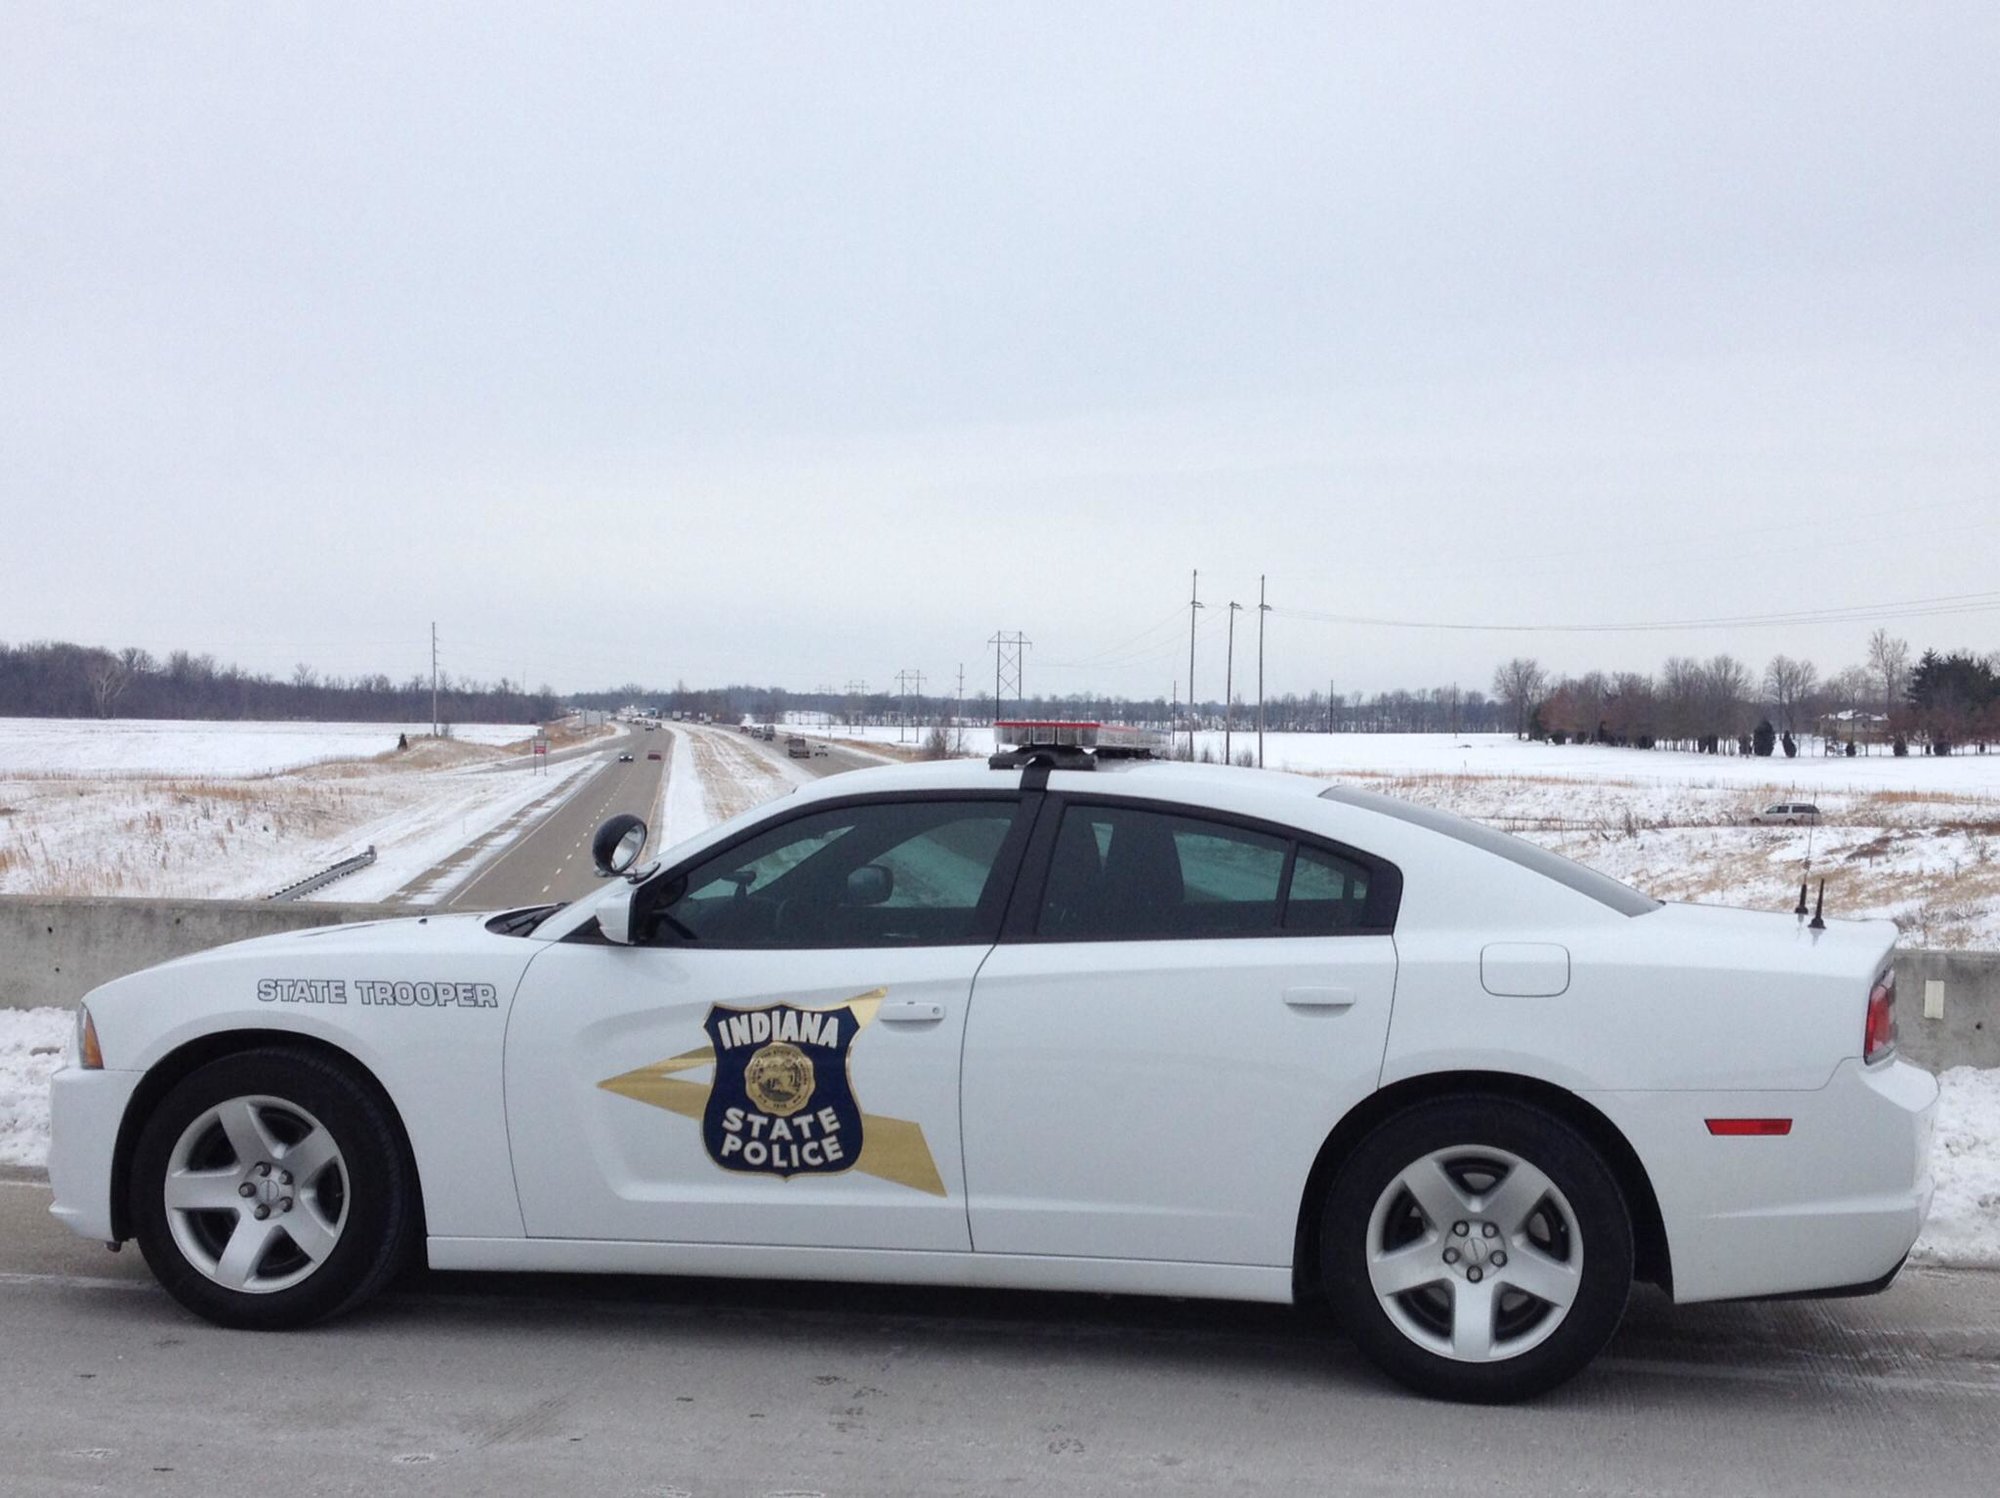 Policejní vozidlo Indiana State Police